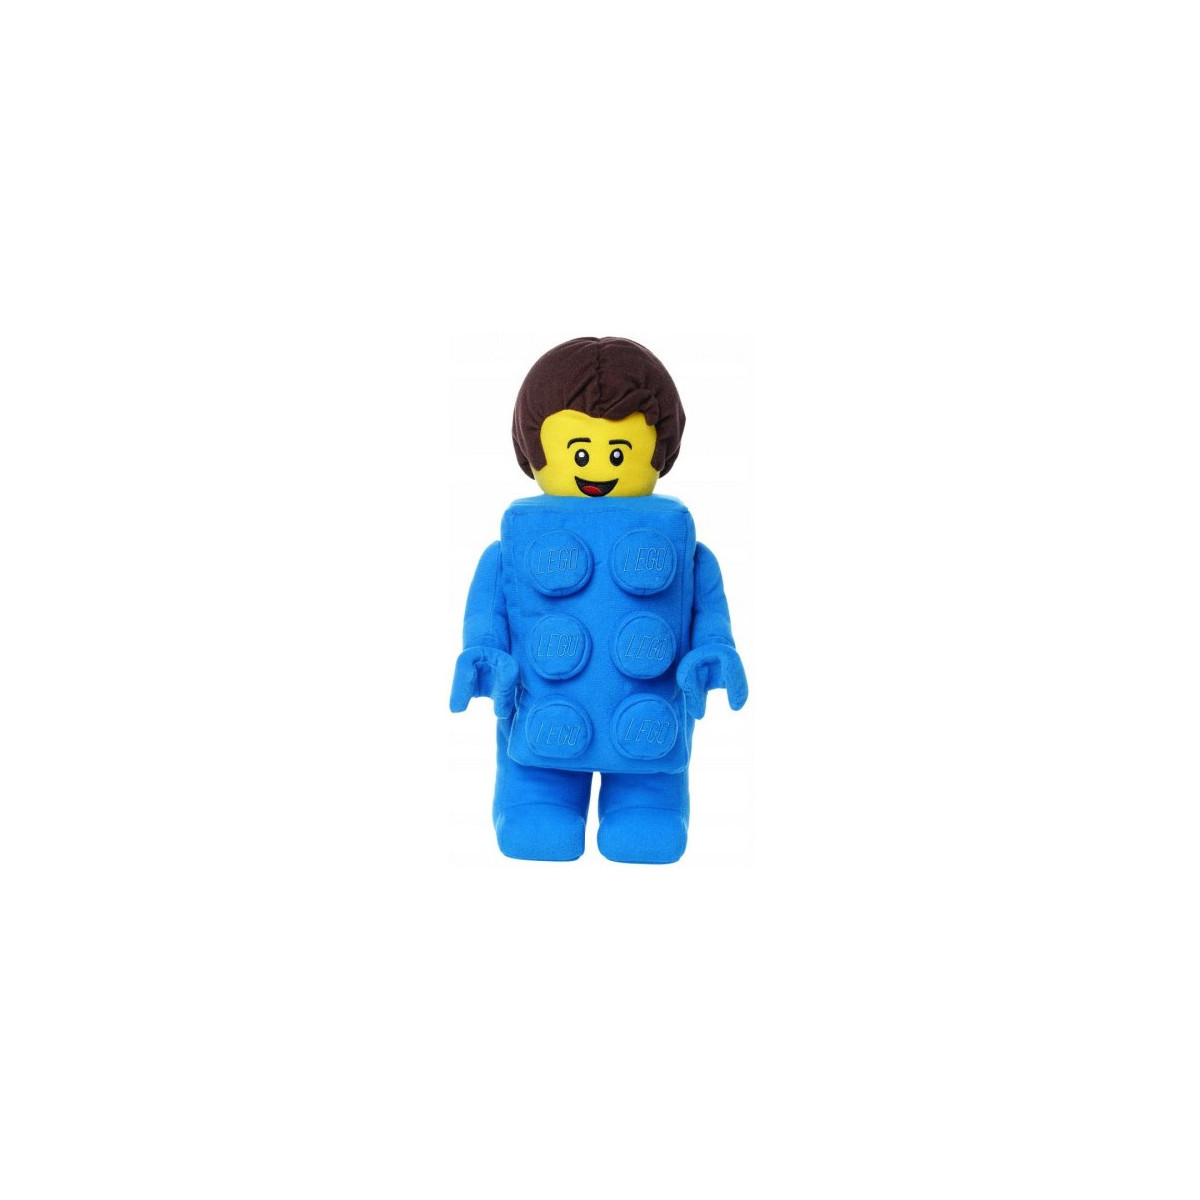 Lego 342170 - Brick suit boy plush